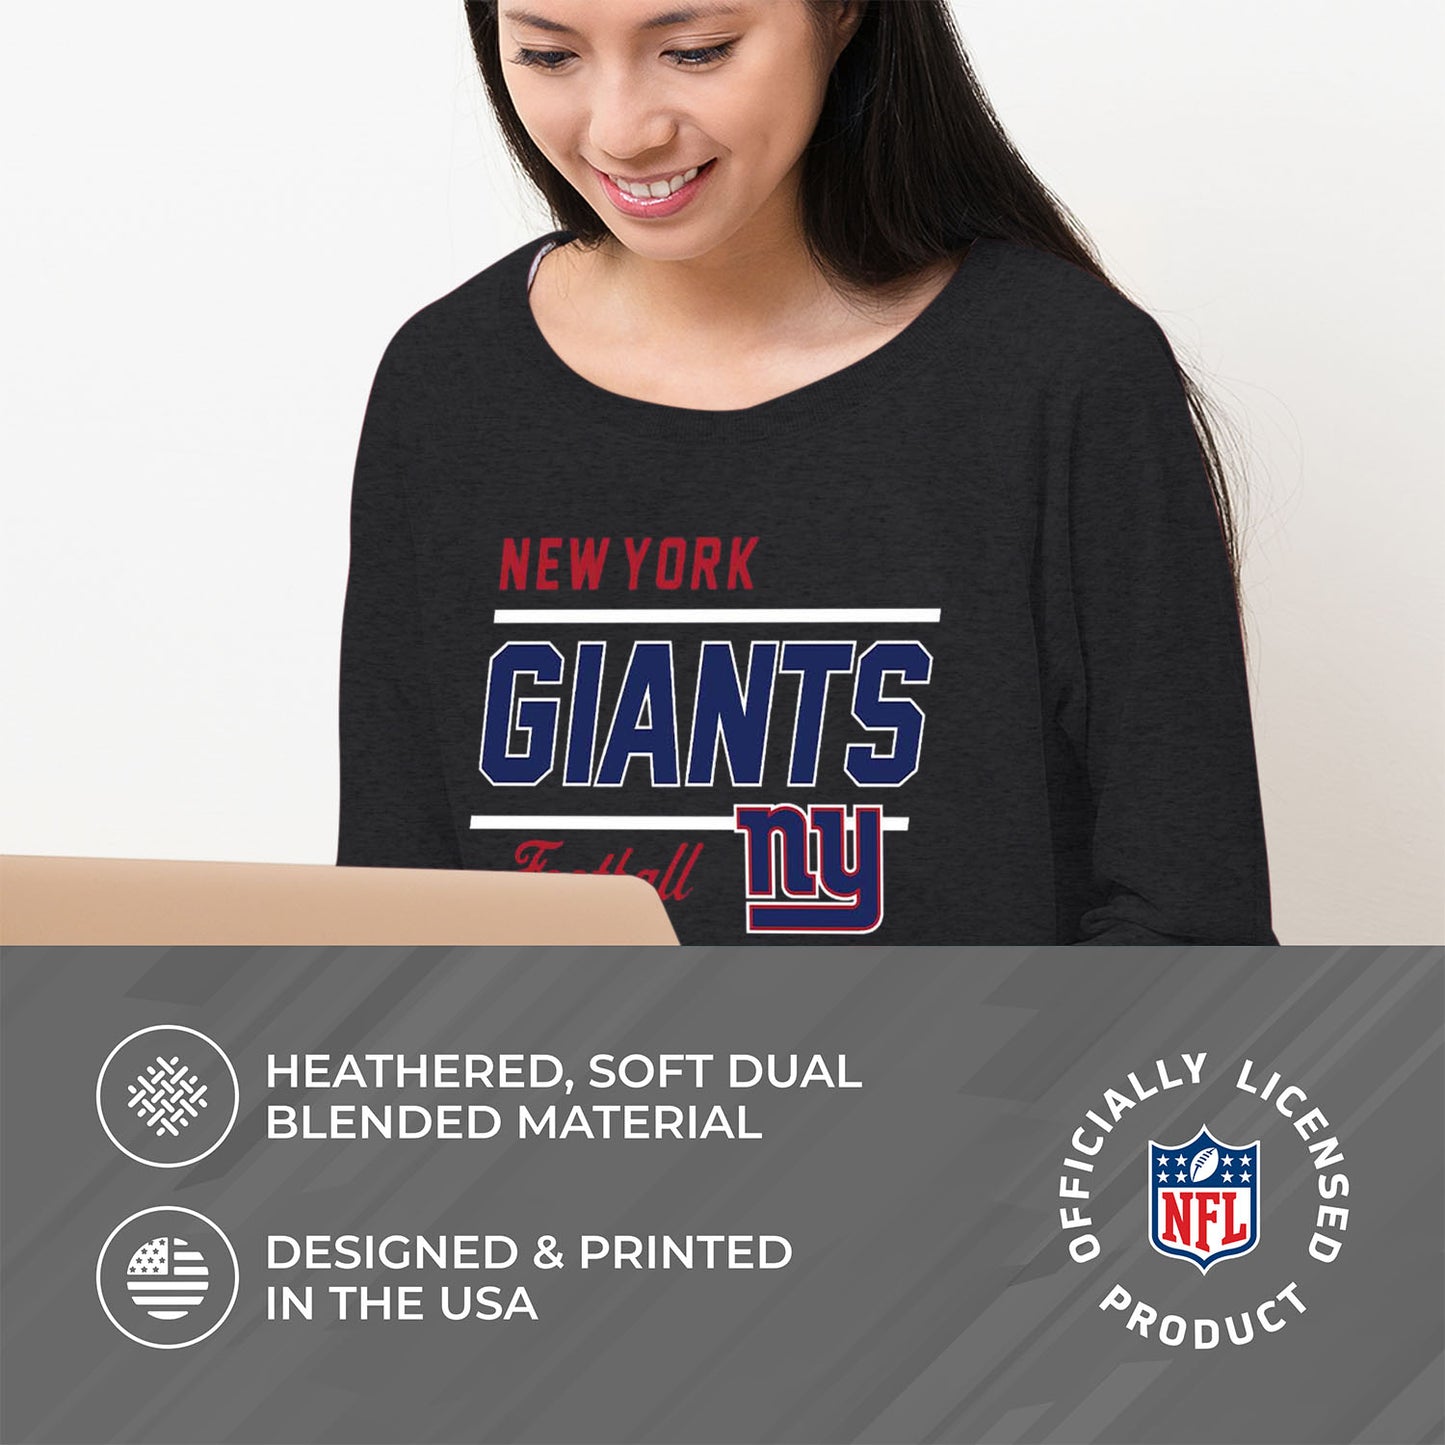 New York Giants NFL Womens Crew Neck Light Weight - Charcoal